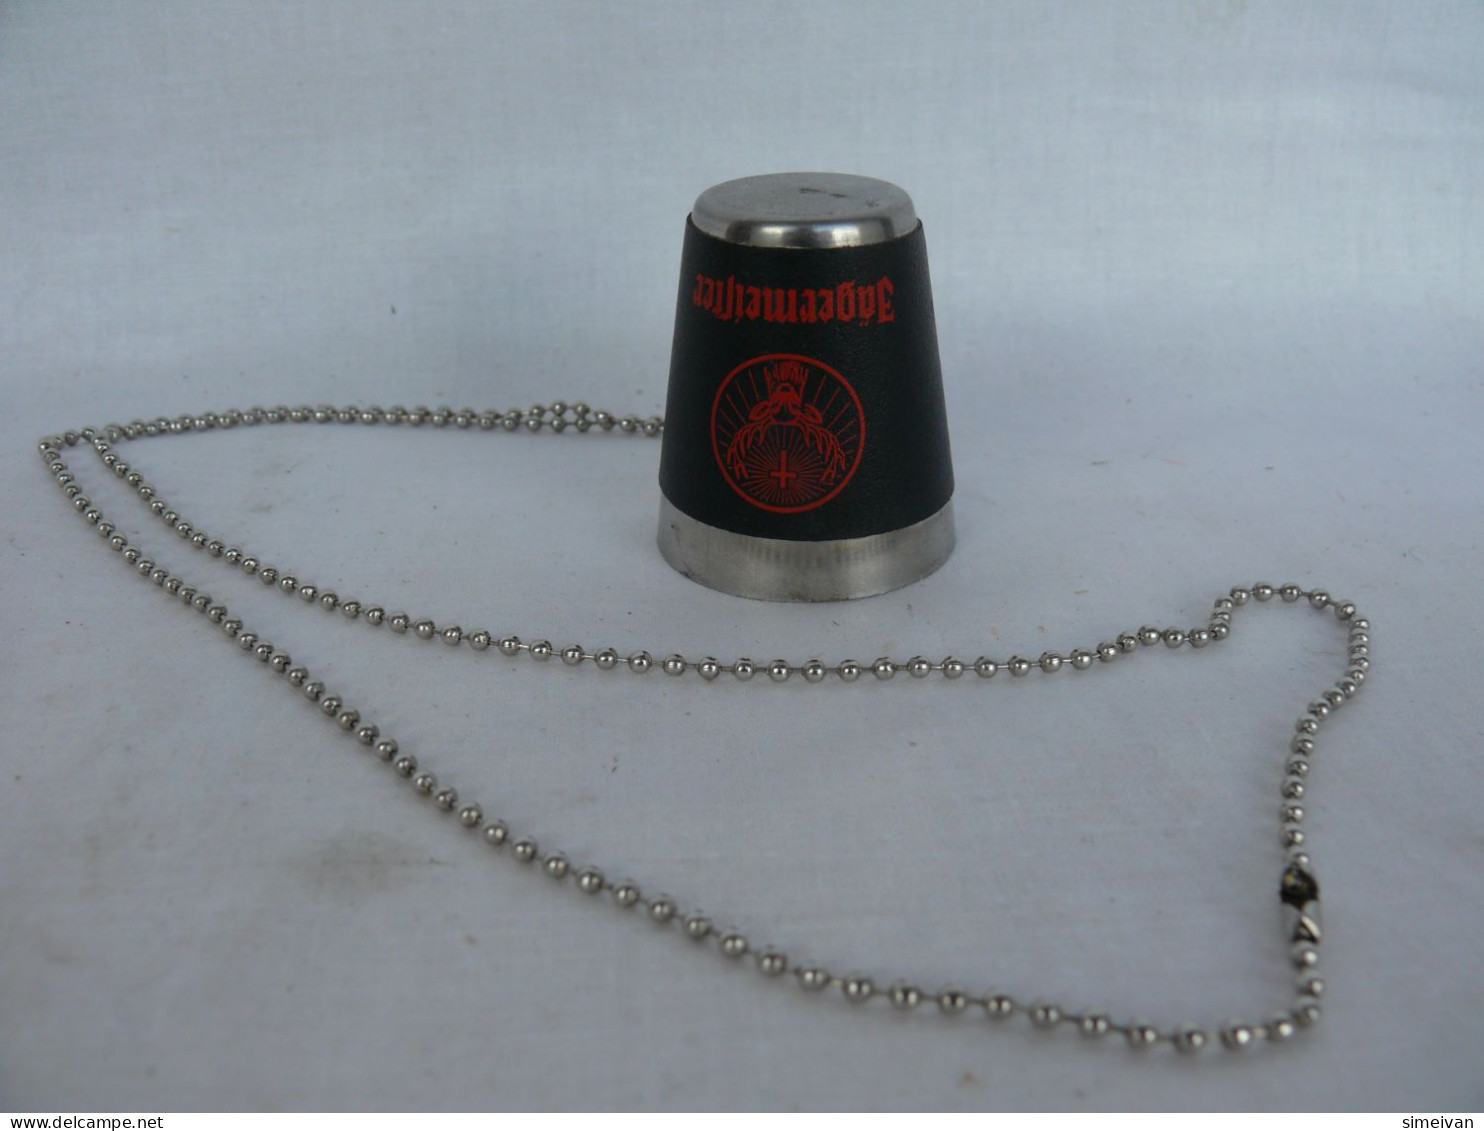 Interesting Jägermeister Small Cup Necklace #1503 - Tassen